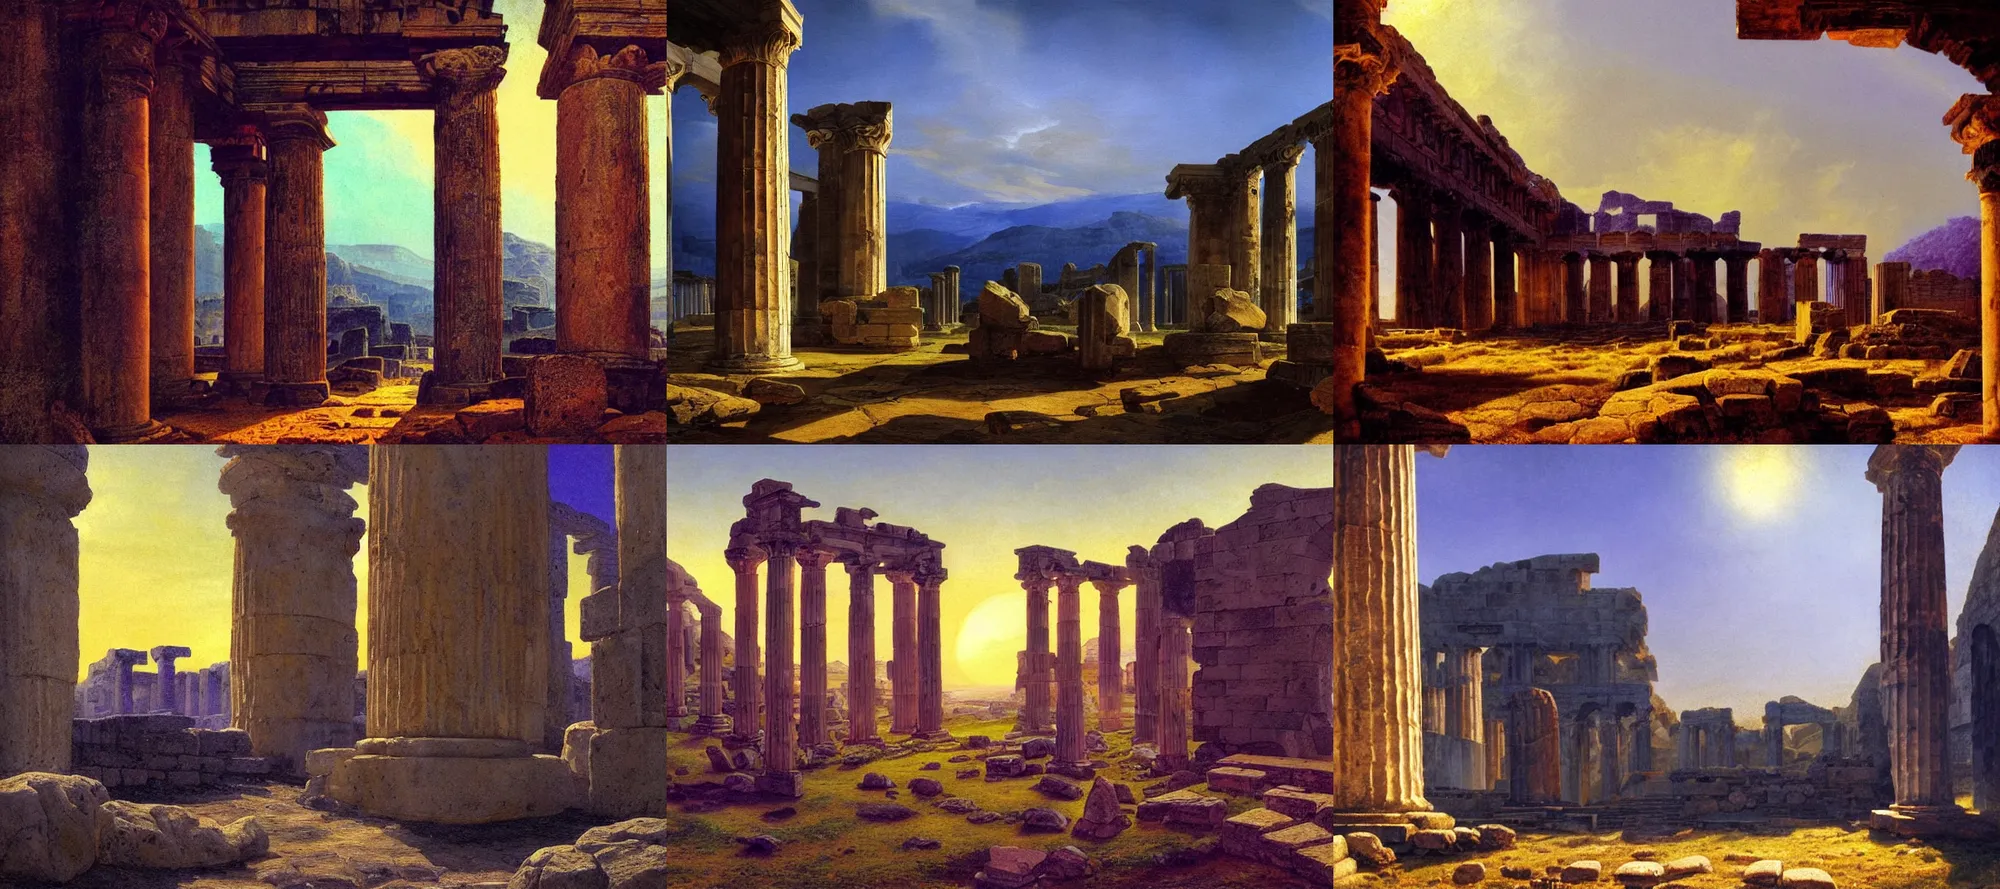 Prompt: closeup, inside ancient greek ruins, digital painting, concept art, colourful,, blue and purple tones, golden hour, volumetric lighting, caspar david friedrich